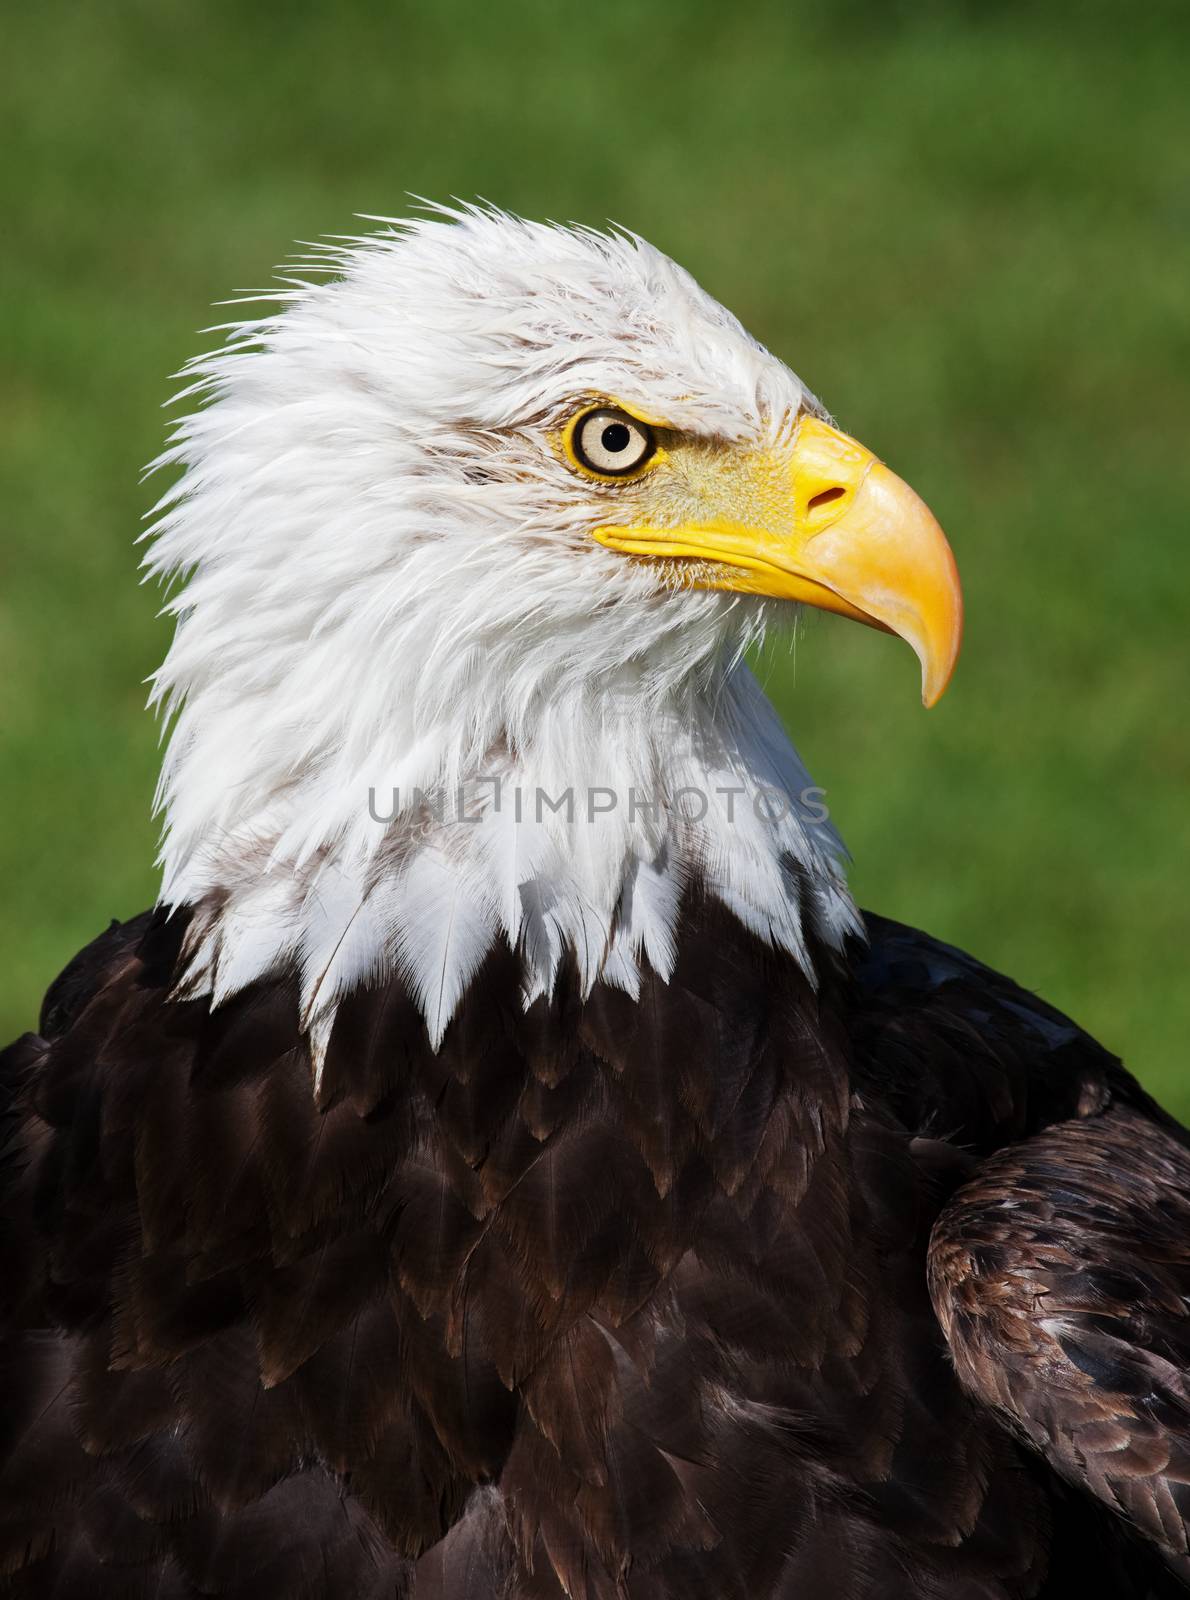 American Bald Eagle by songbird839